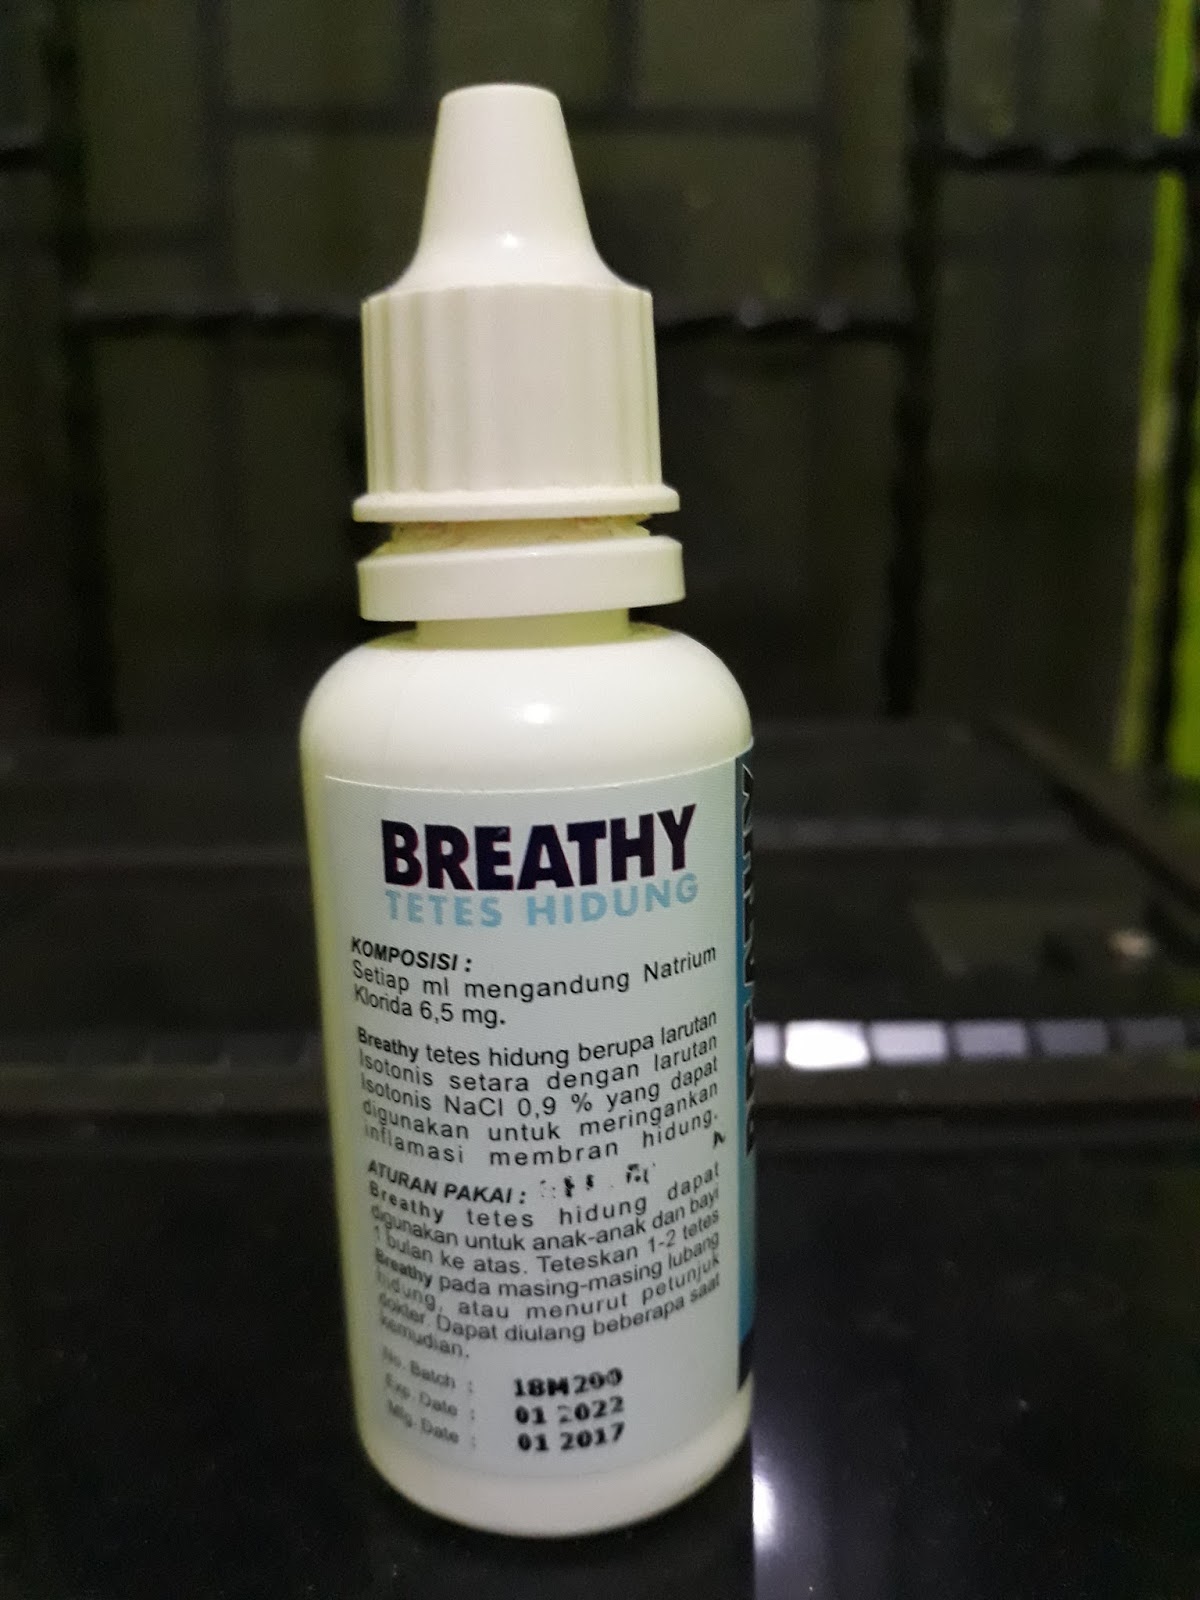 Breathy si tetes hidung yang menjadi solusi